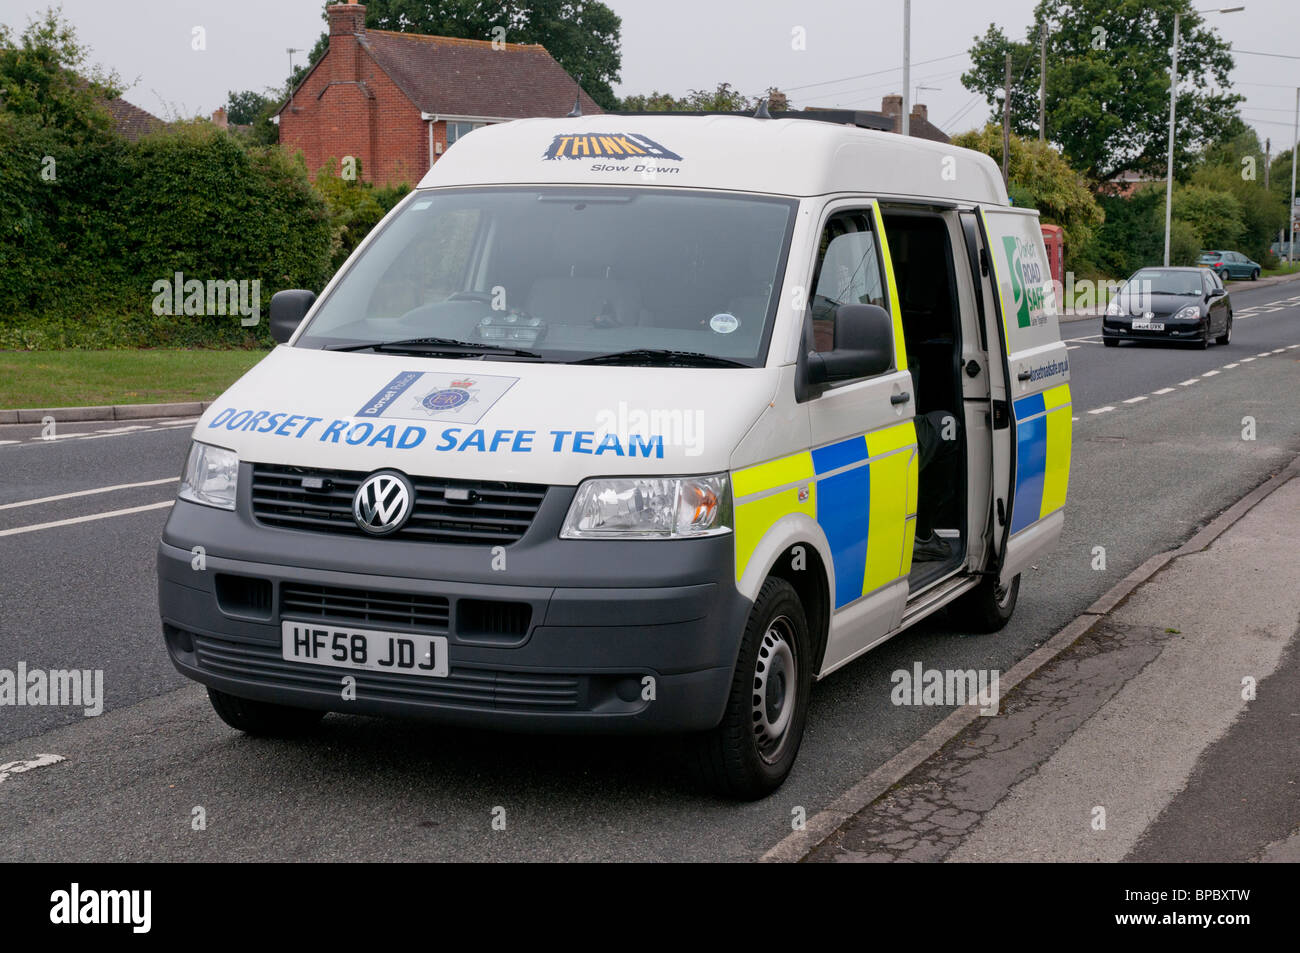 Exterior view of a Dorset Police speed camera van Stock Photo